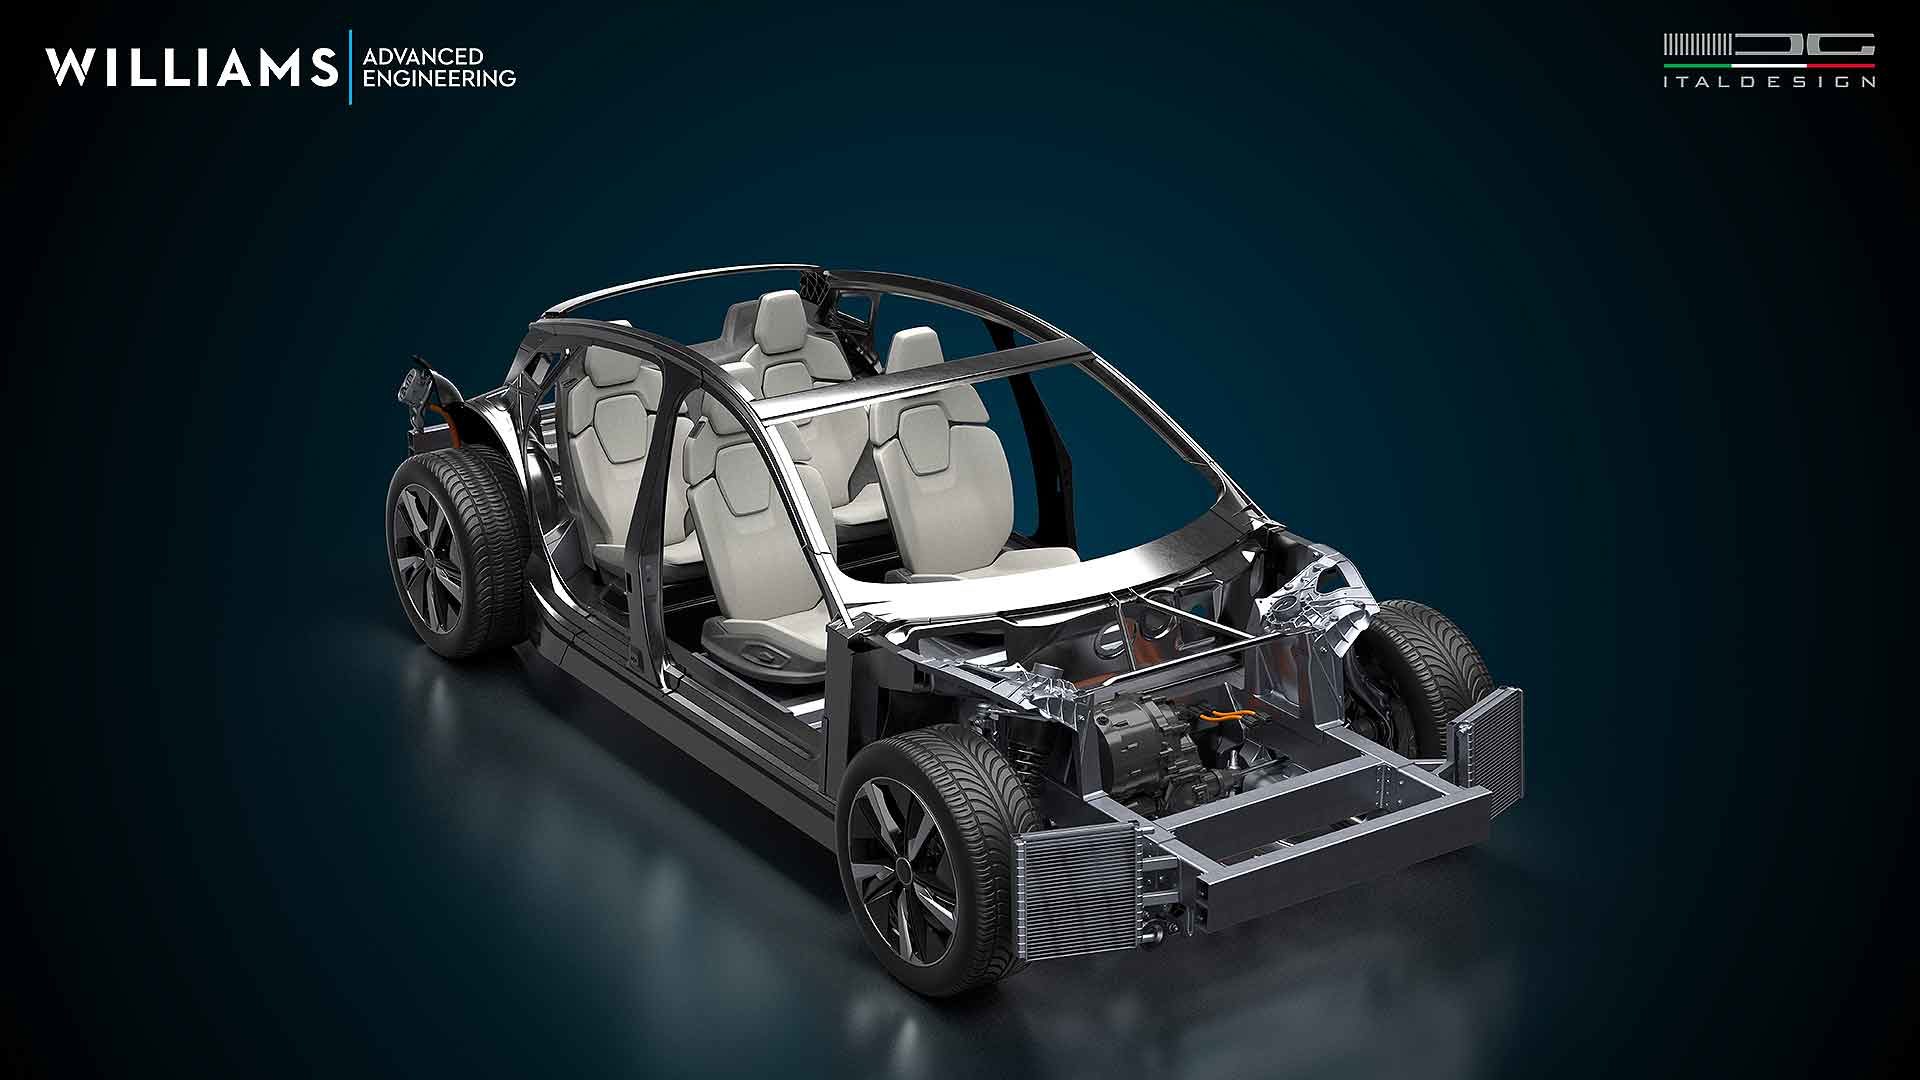 Williams Advanced Engineering Italdesign crossover EV concept